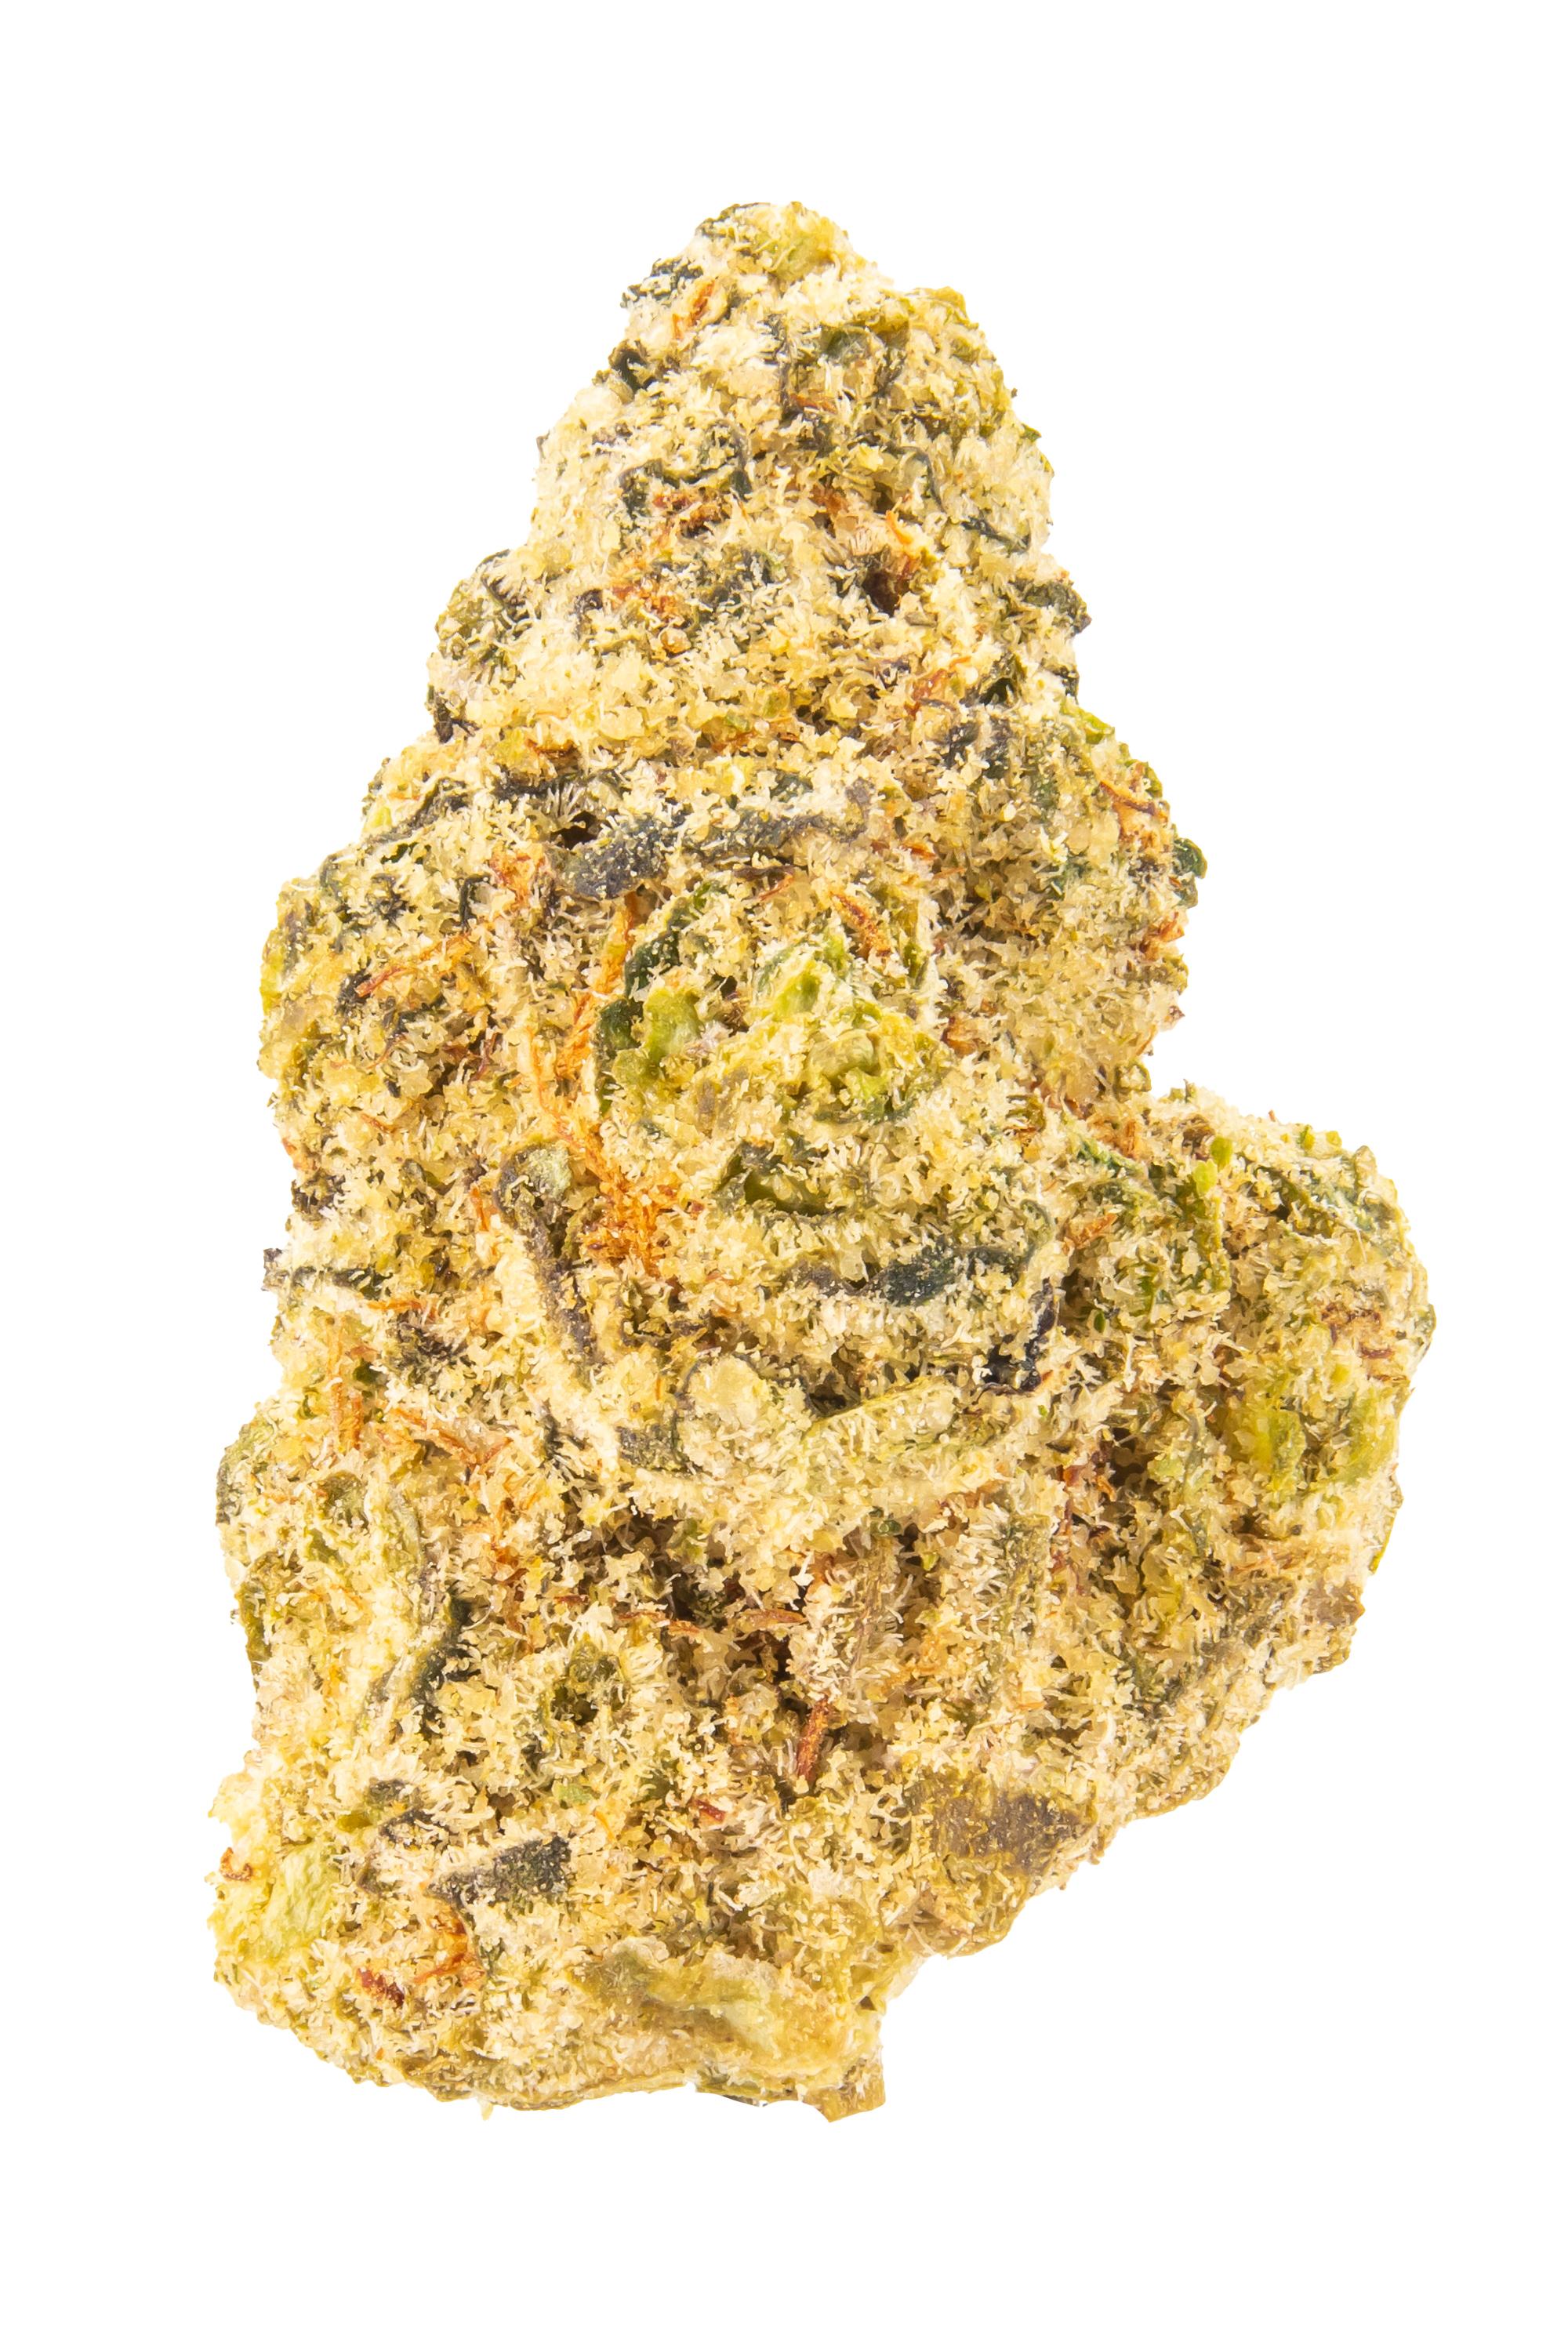 Georgia Velvet Hybrid Cannabis Strain Thumbnail